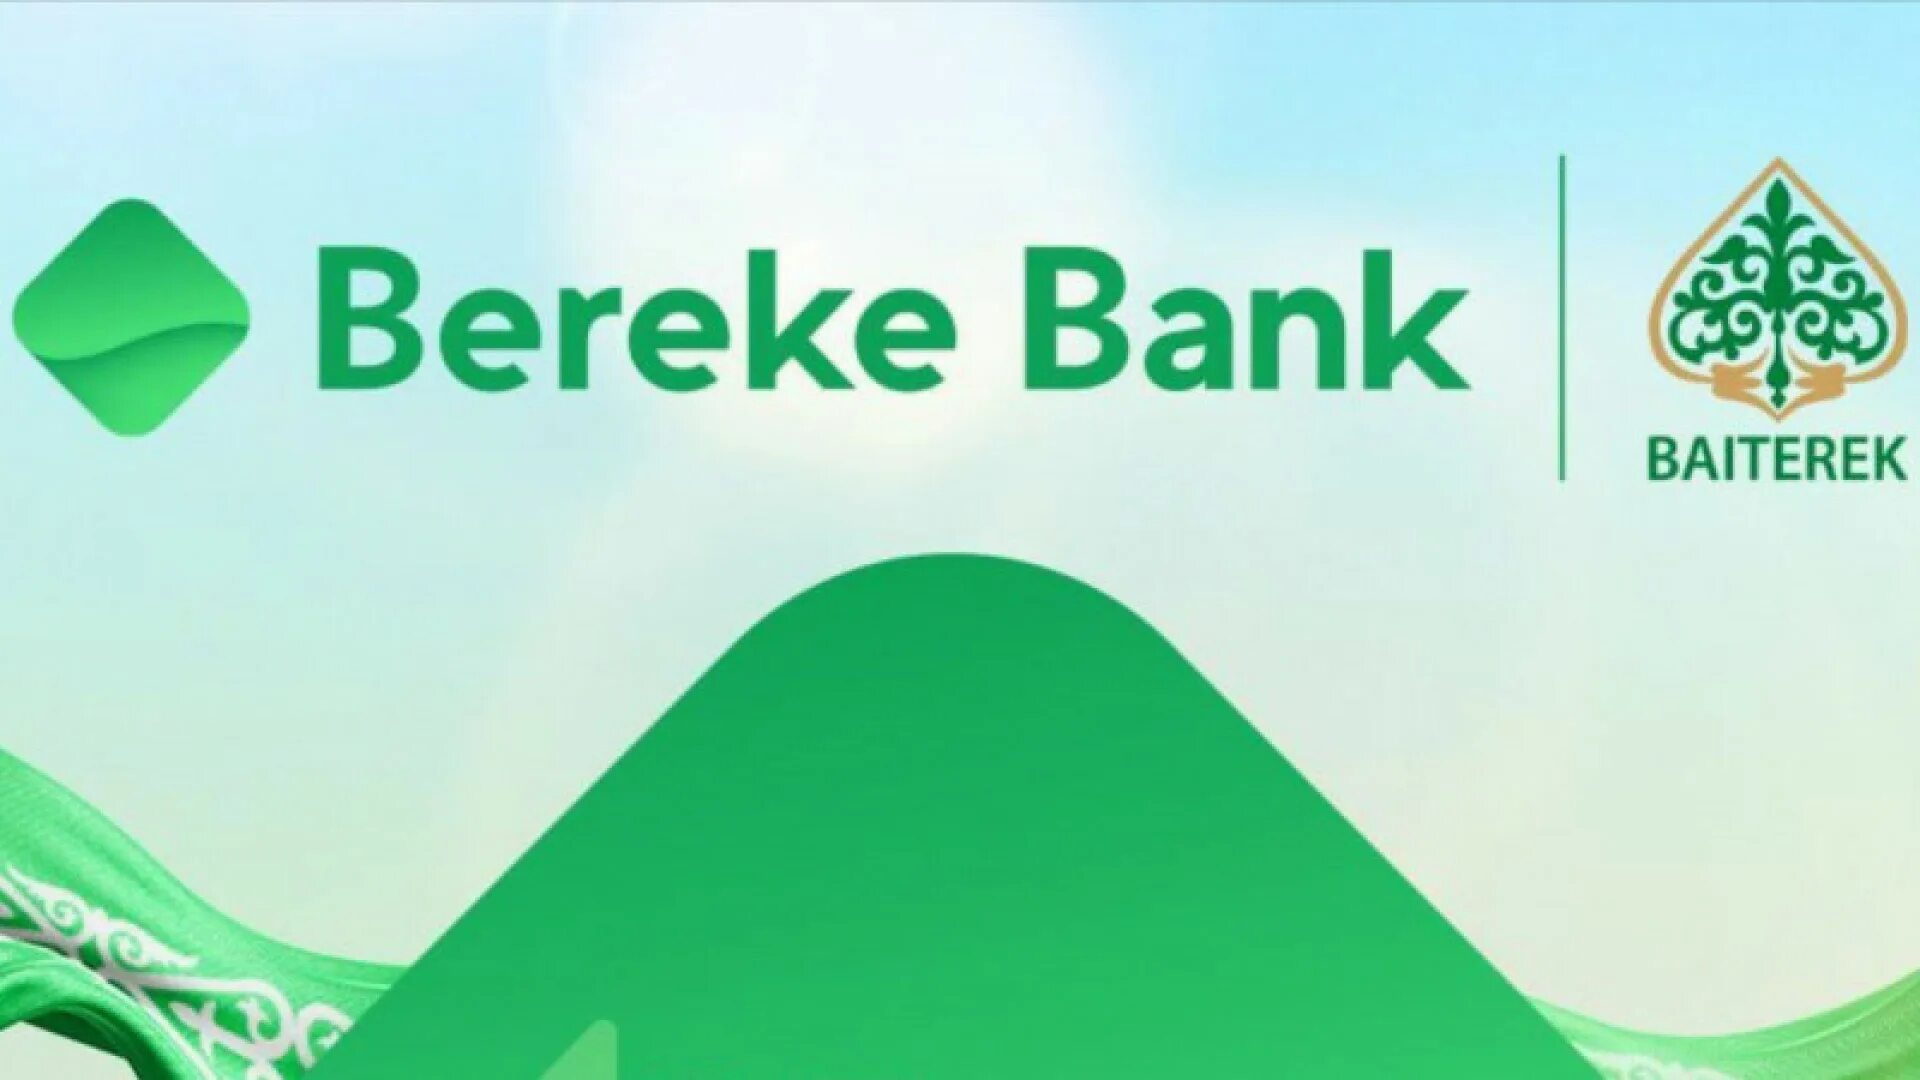 Береке банк. Береке банк Казахстан. Bereke Bank logo. Bereke Bank Казахстан логотип. Береке банк колл